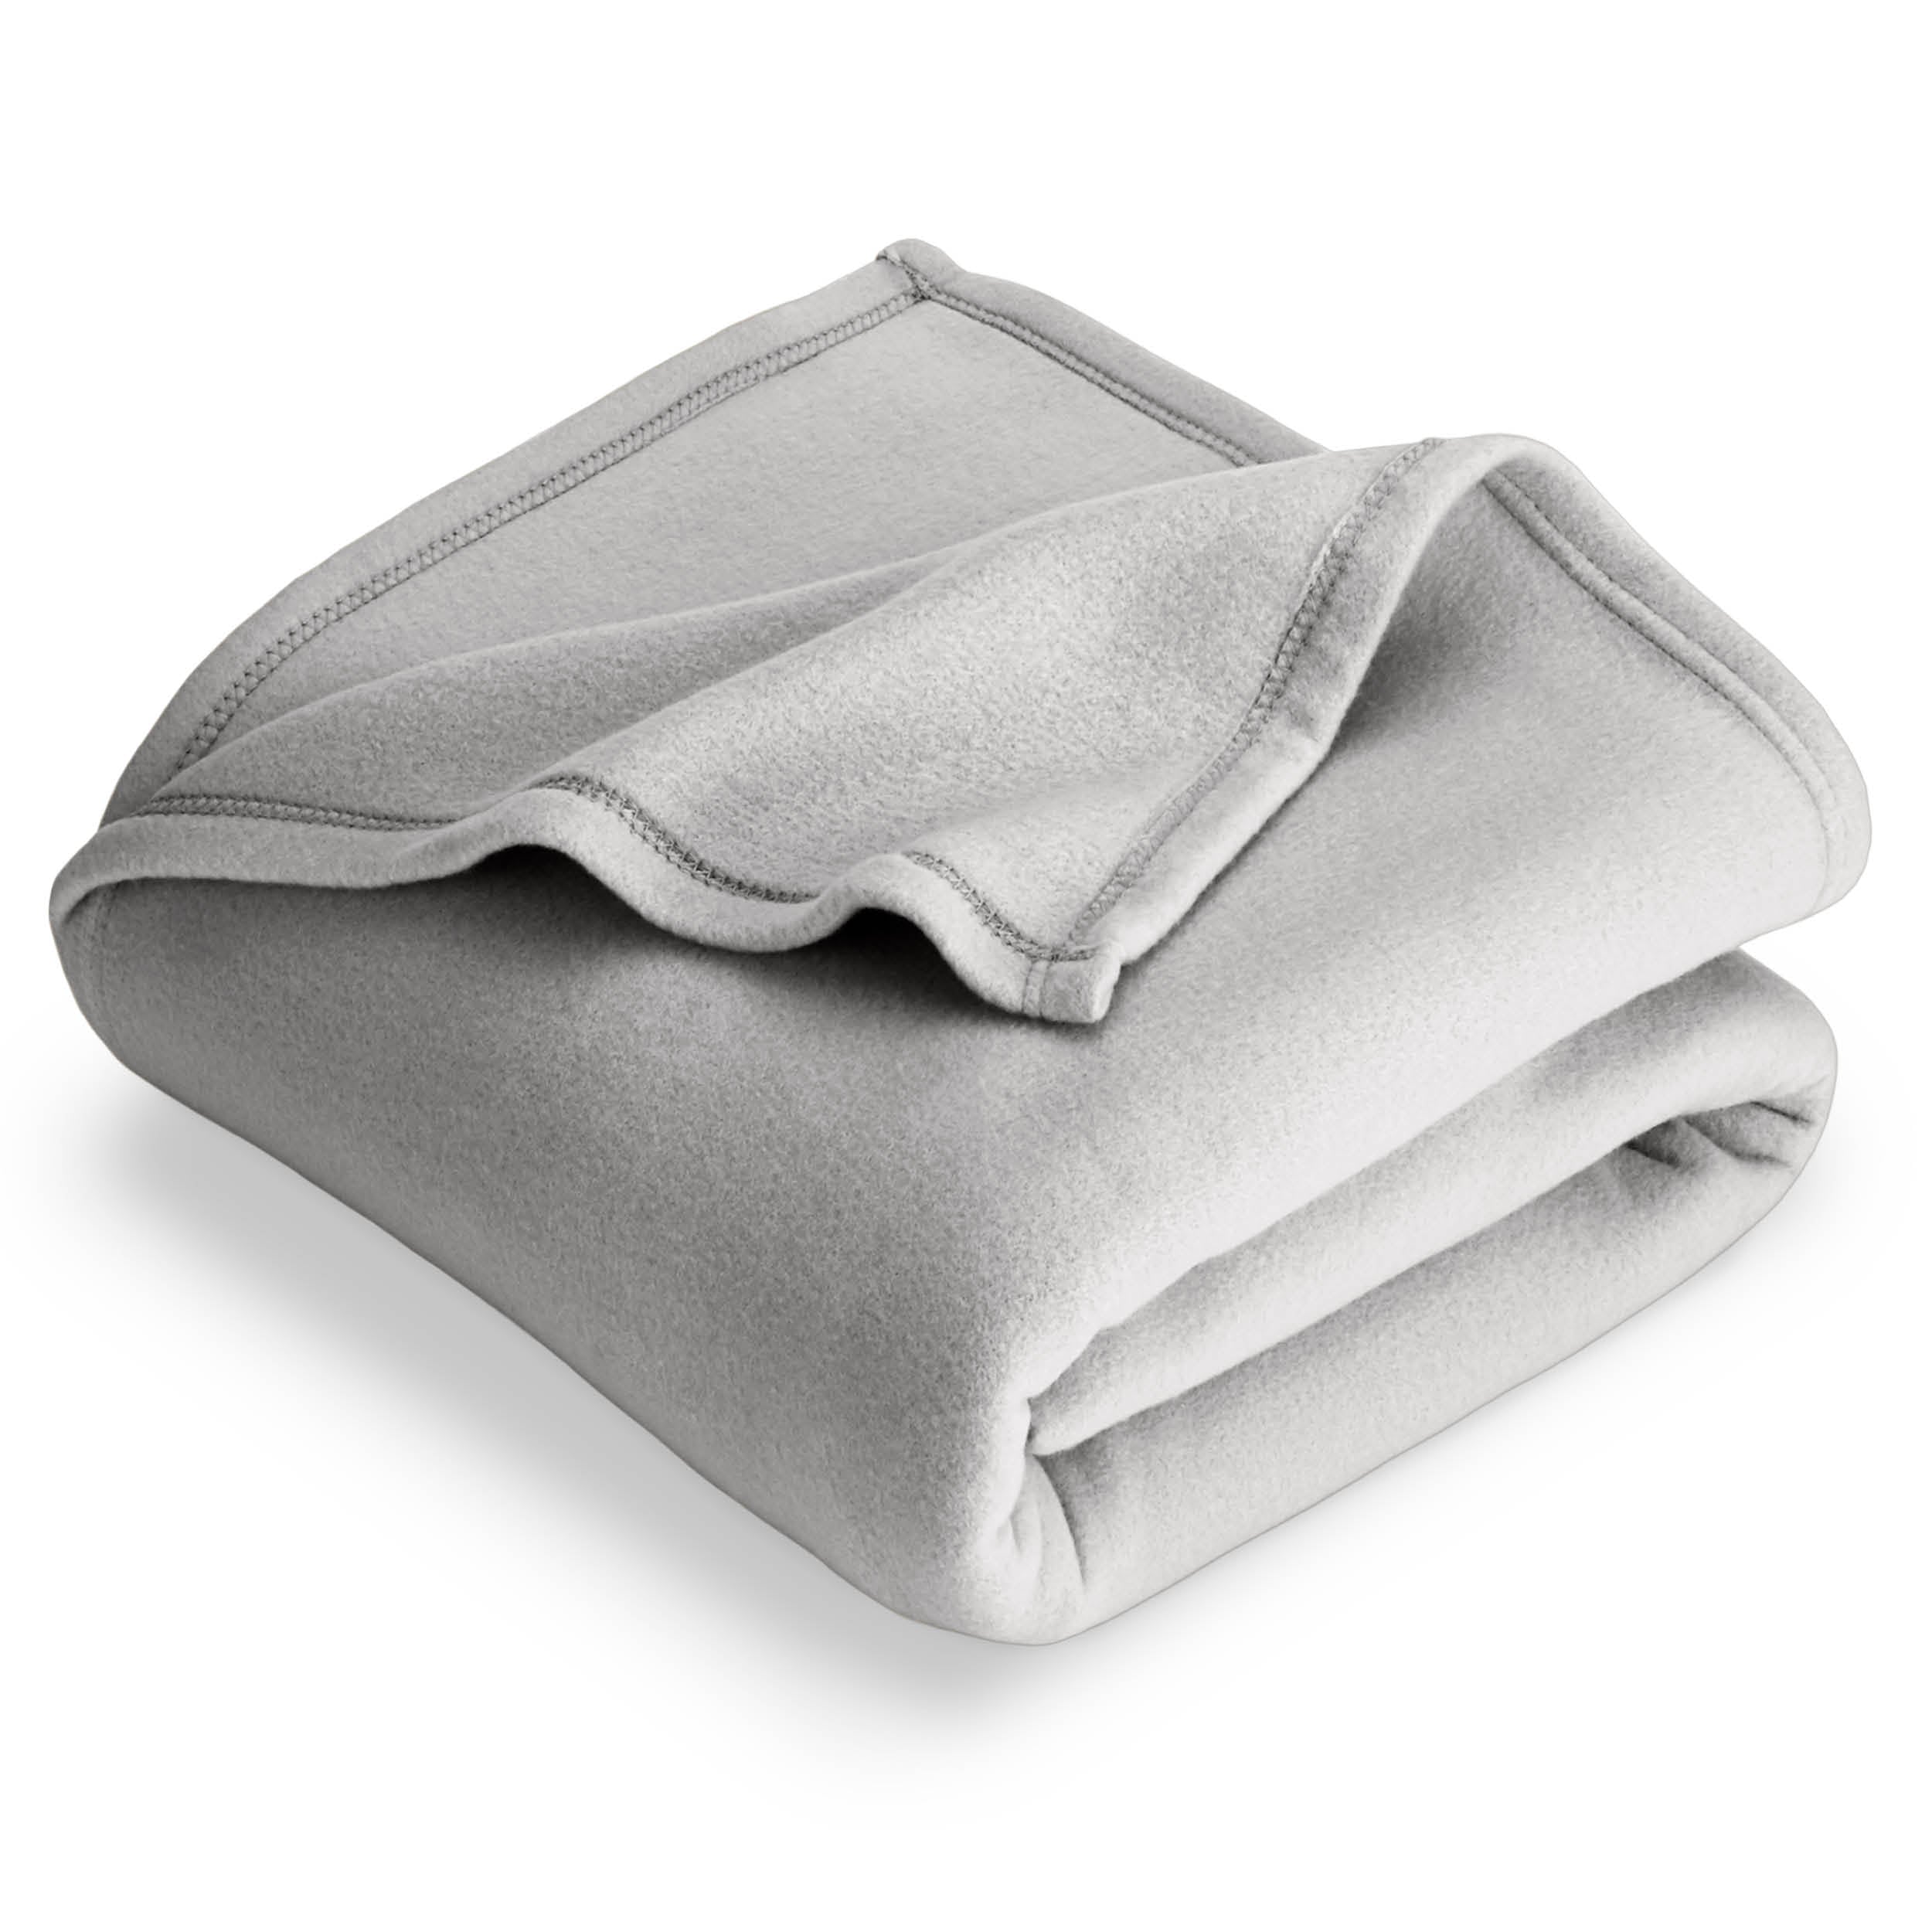 Light grey polar fleece blanket folded with 1 corner folded back